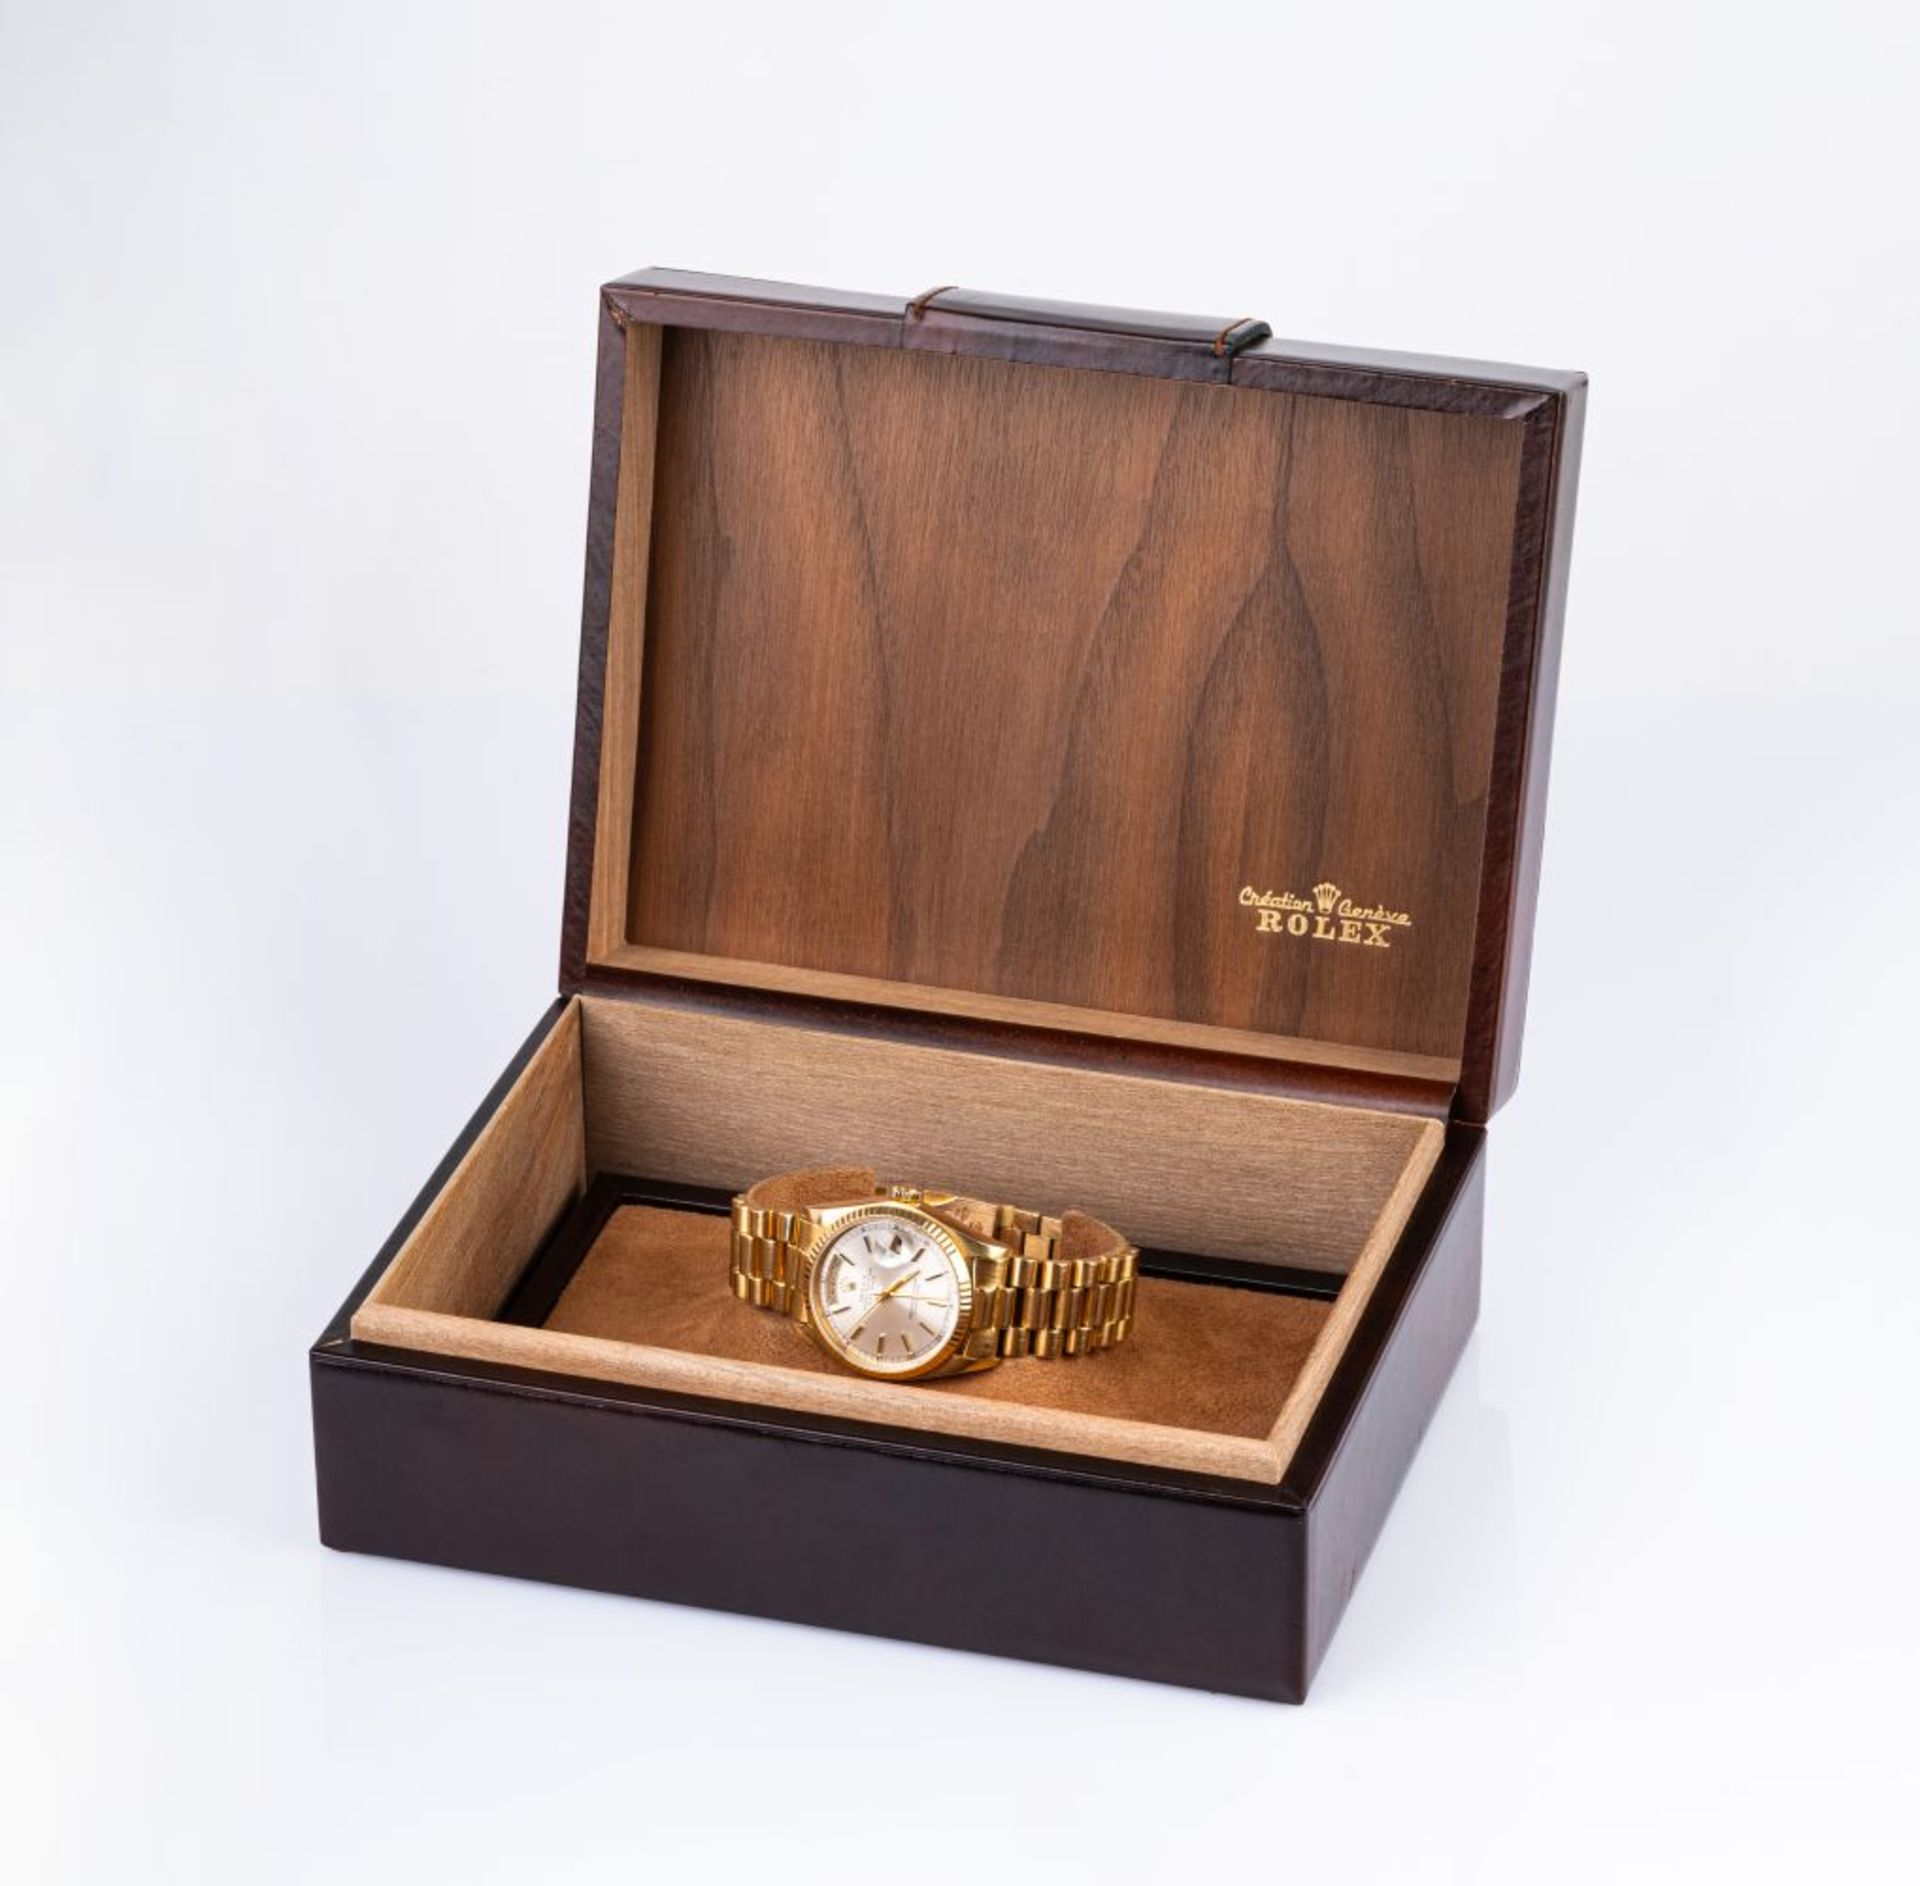 Rolex. A Gentleman's Wristwatch Day-Date. - Image 4 of 7